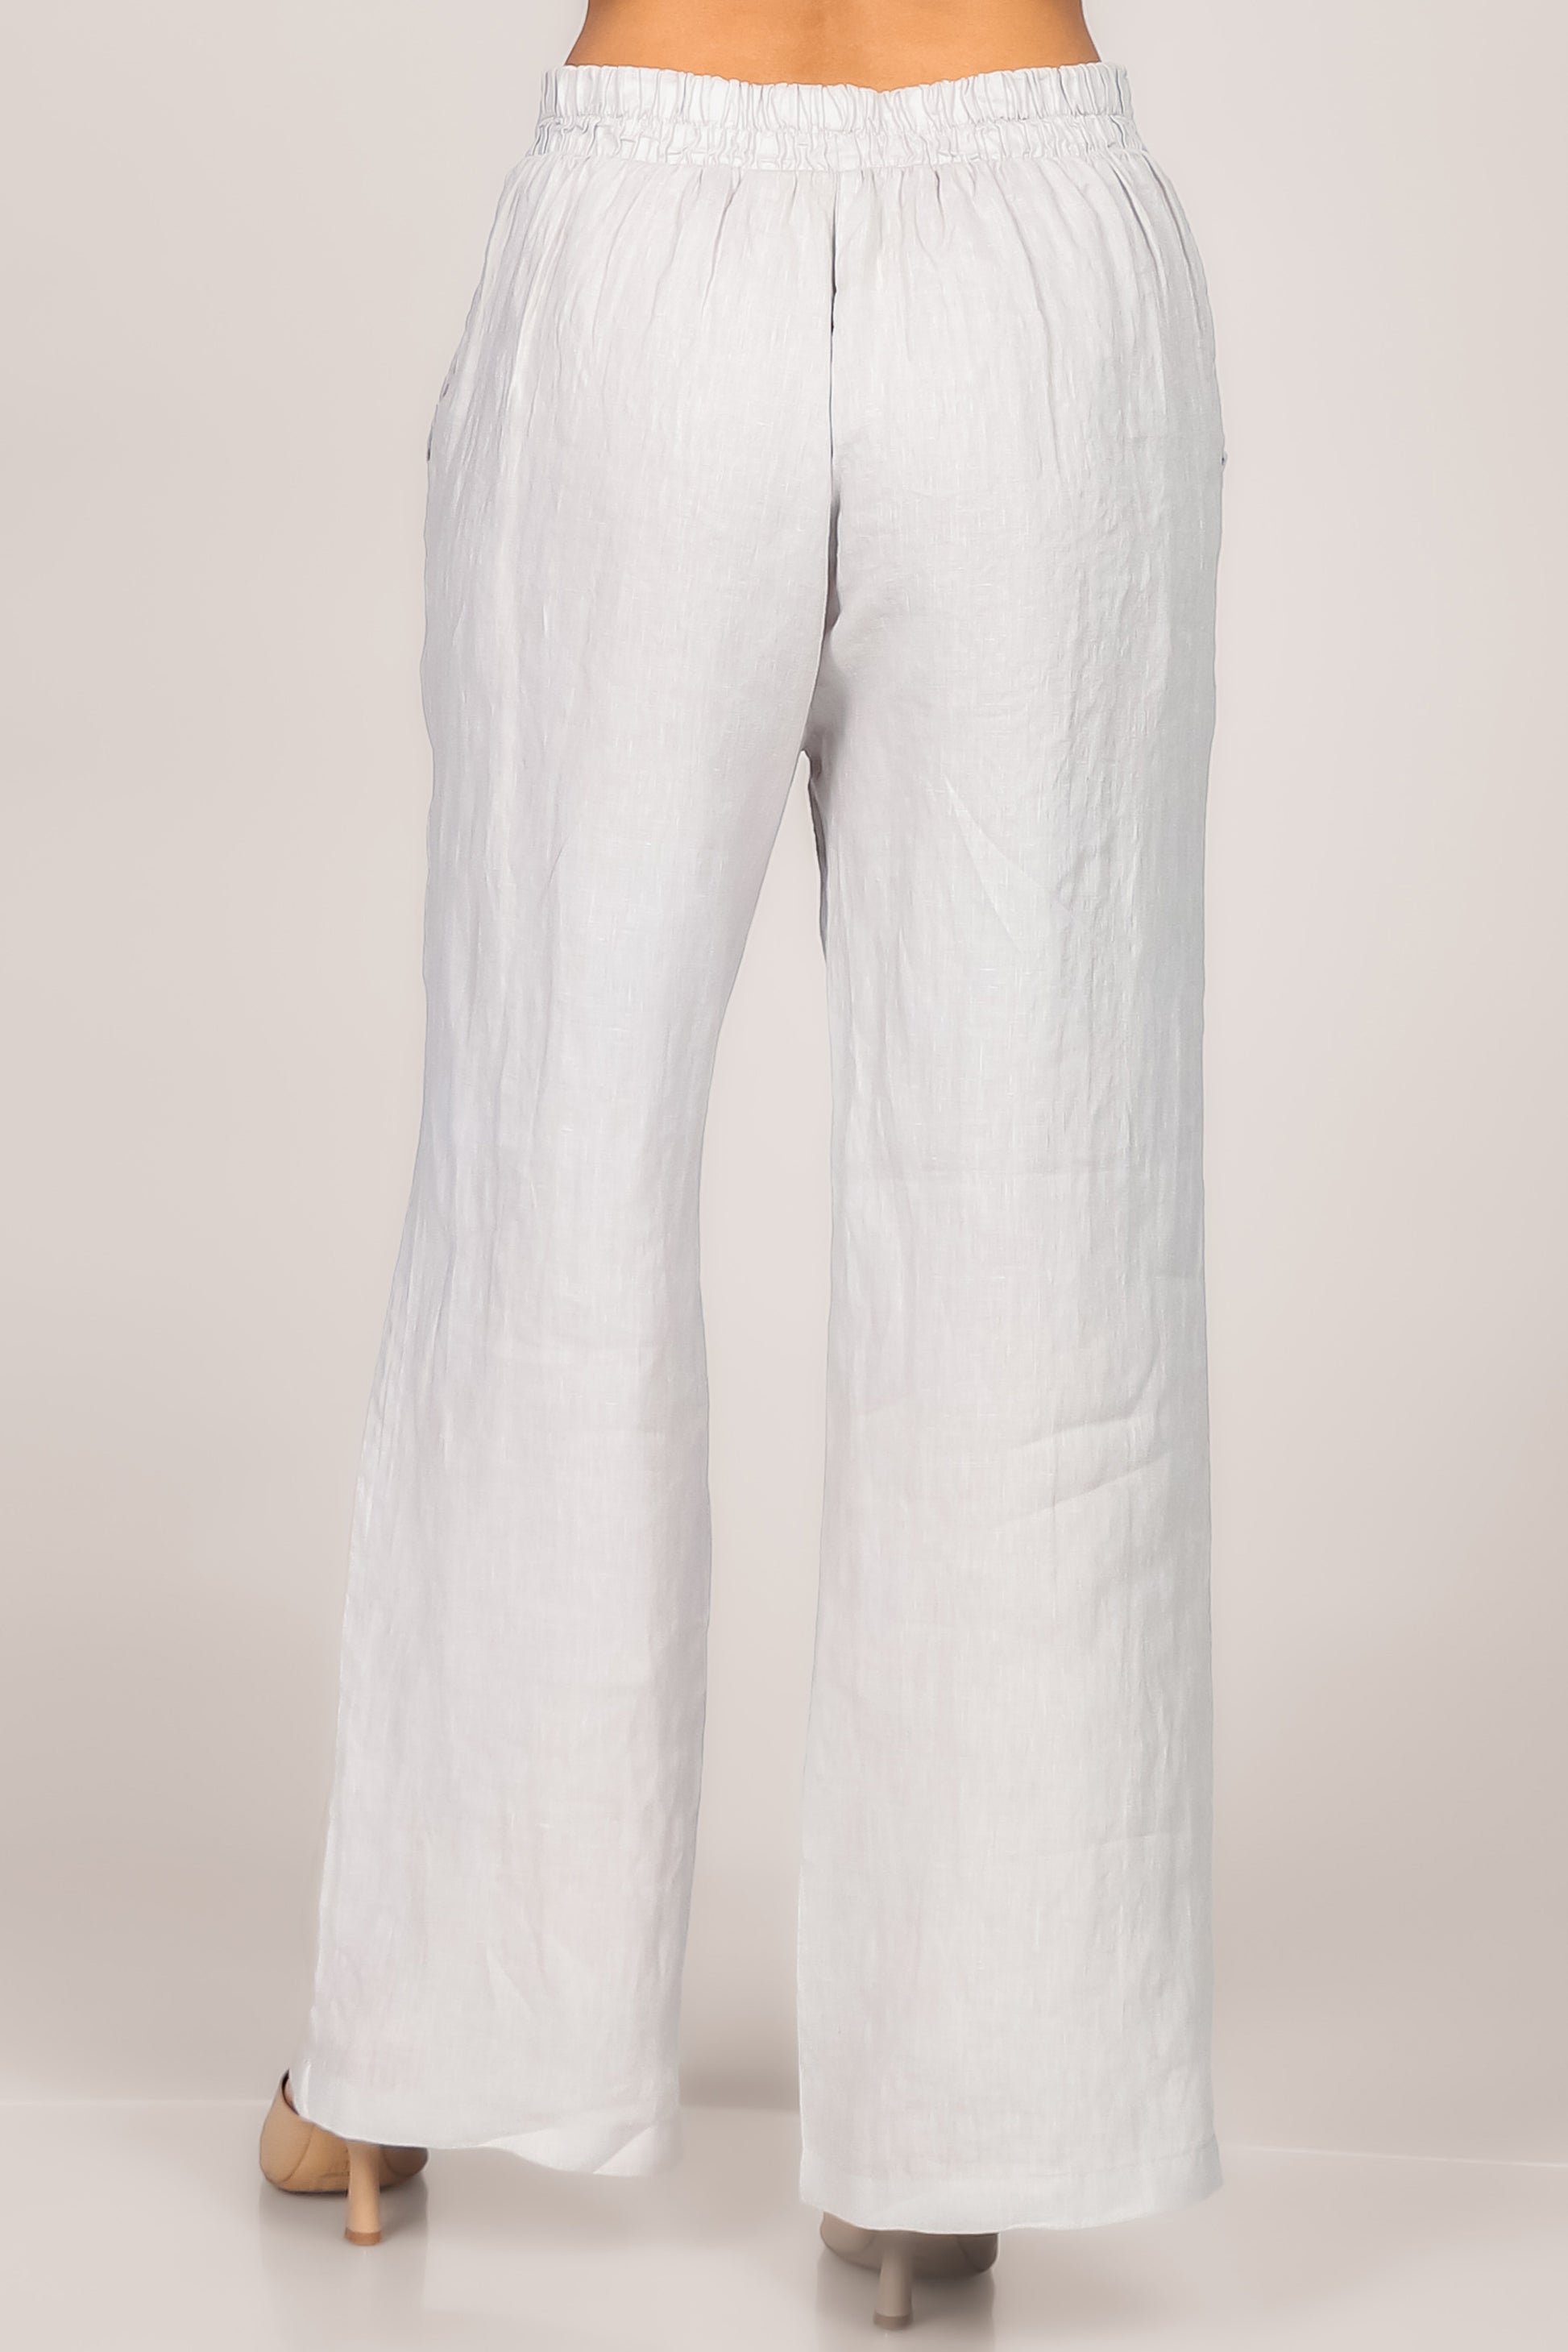 Soft Surroundings sz M 100% Linen High Rise Wide Leg Pants pull on B3